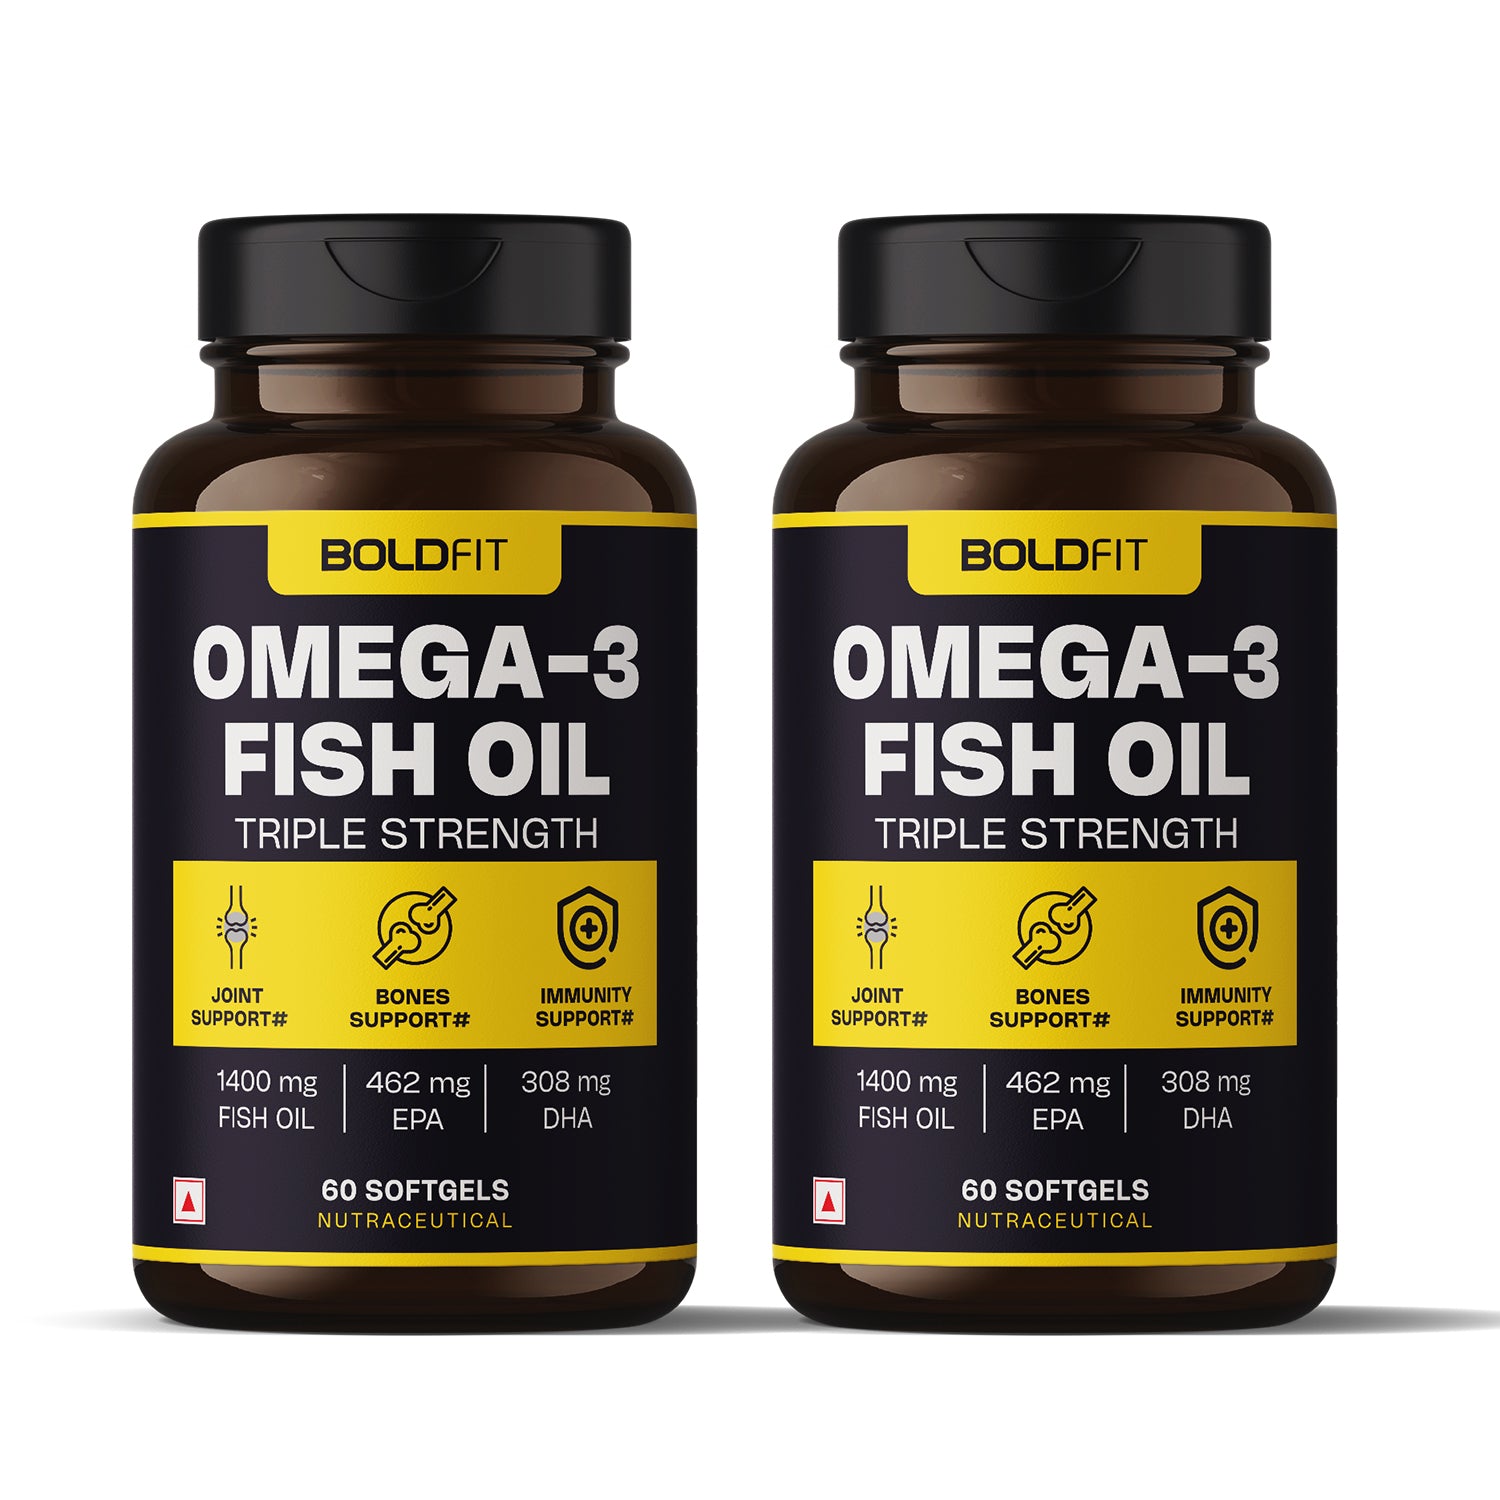 Boldfit Omega 3 Fish Oil Capsules for men and women